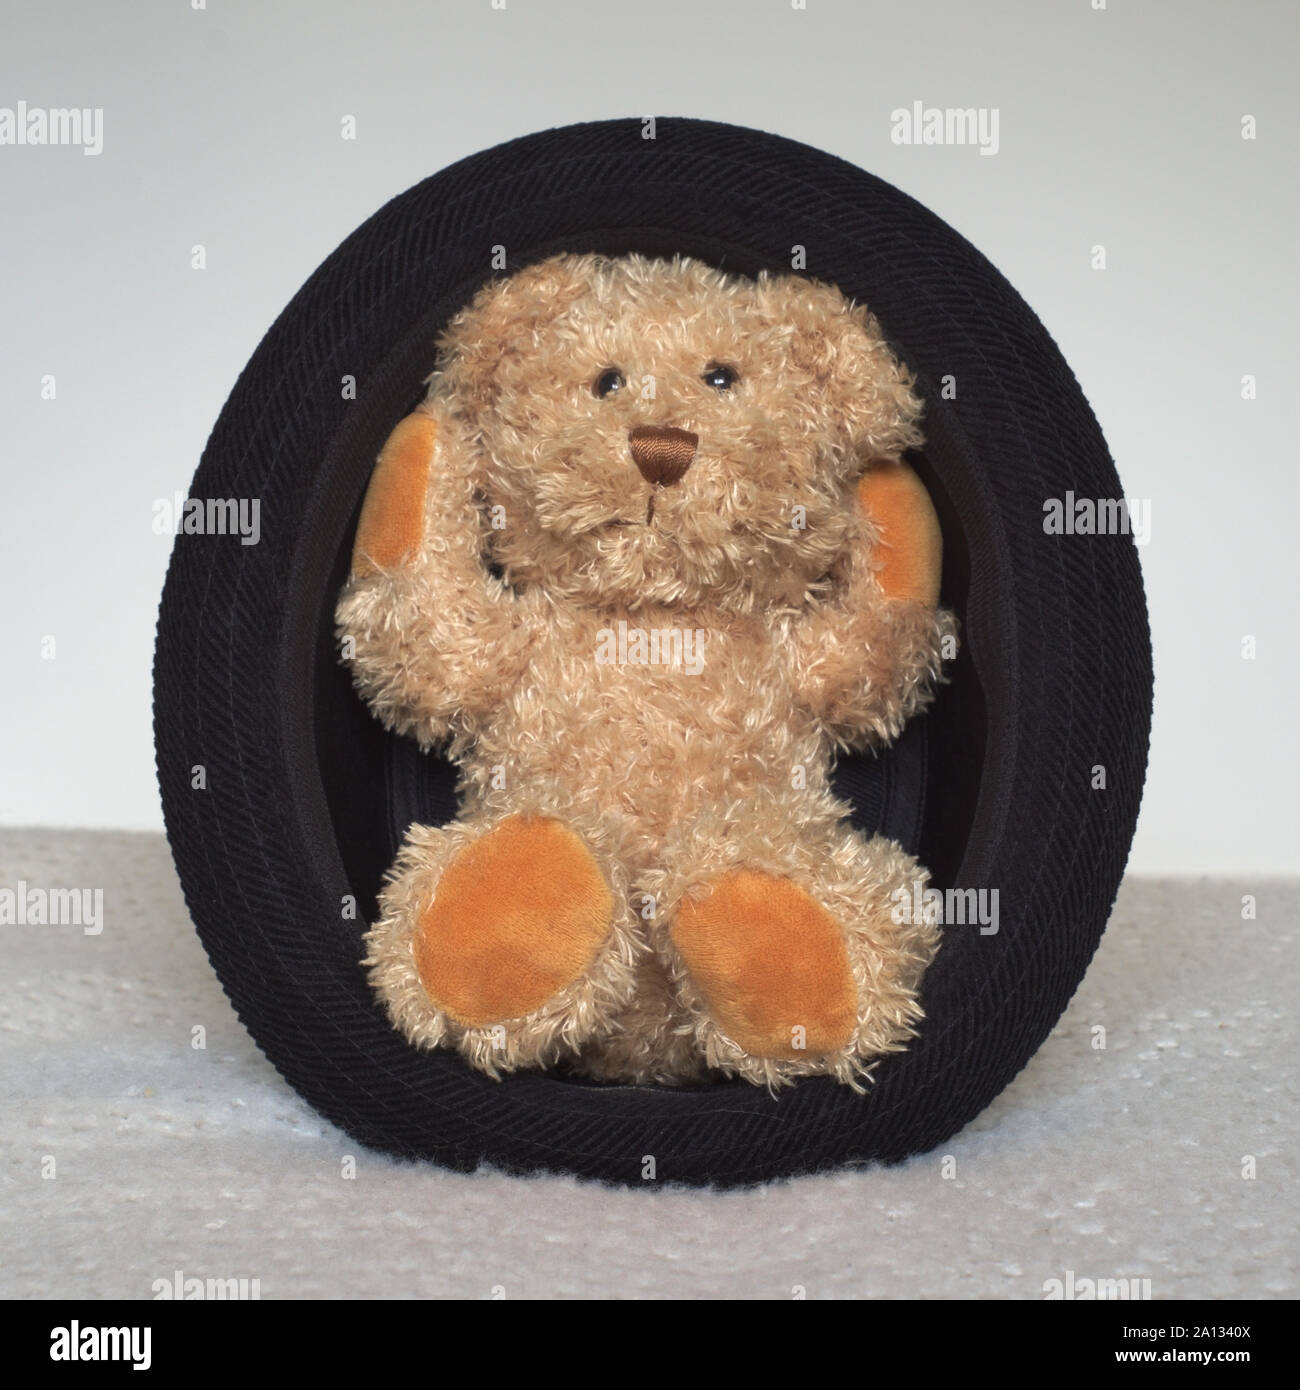 Small Teddy Bear Inside a Hat Stock Photo